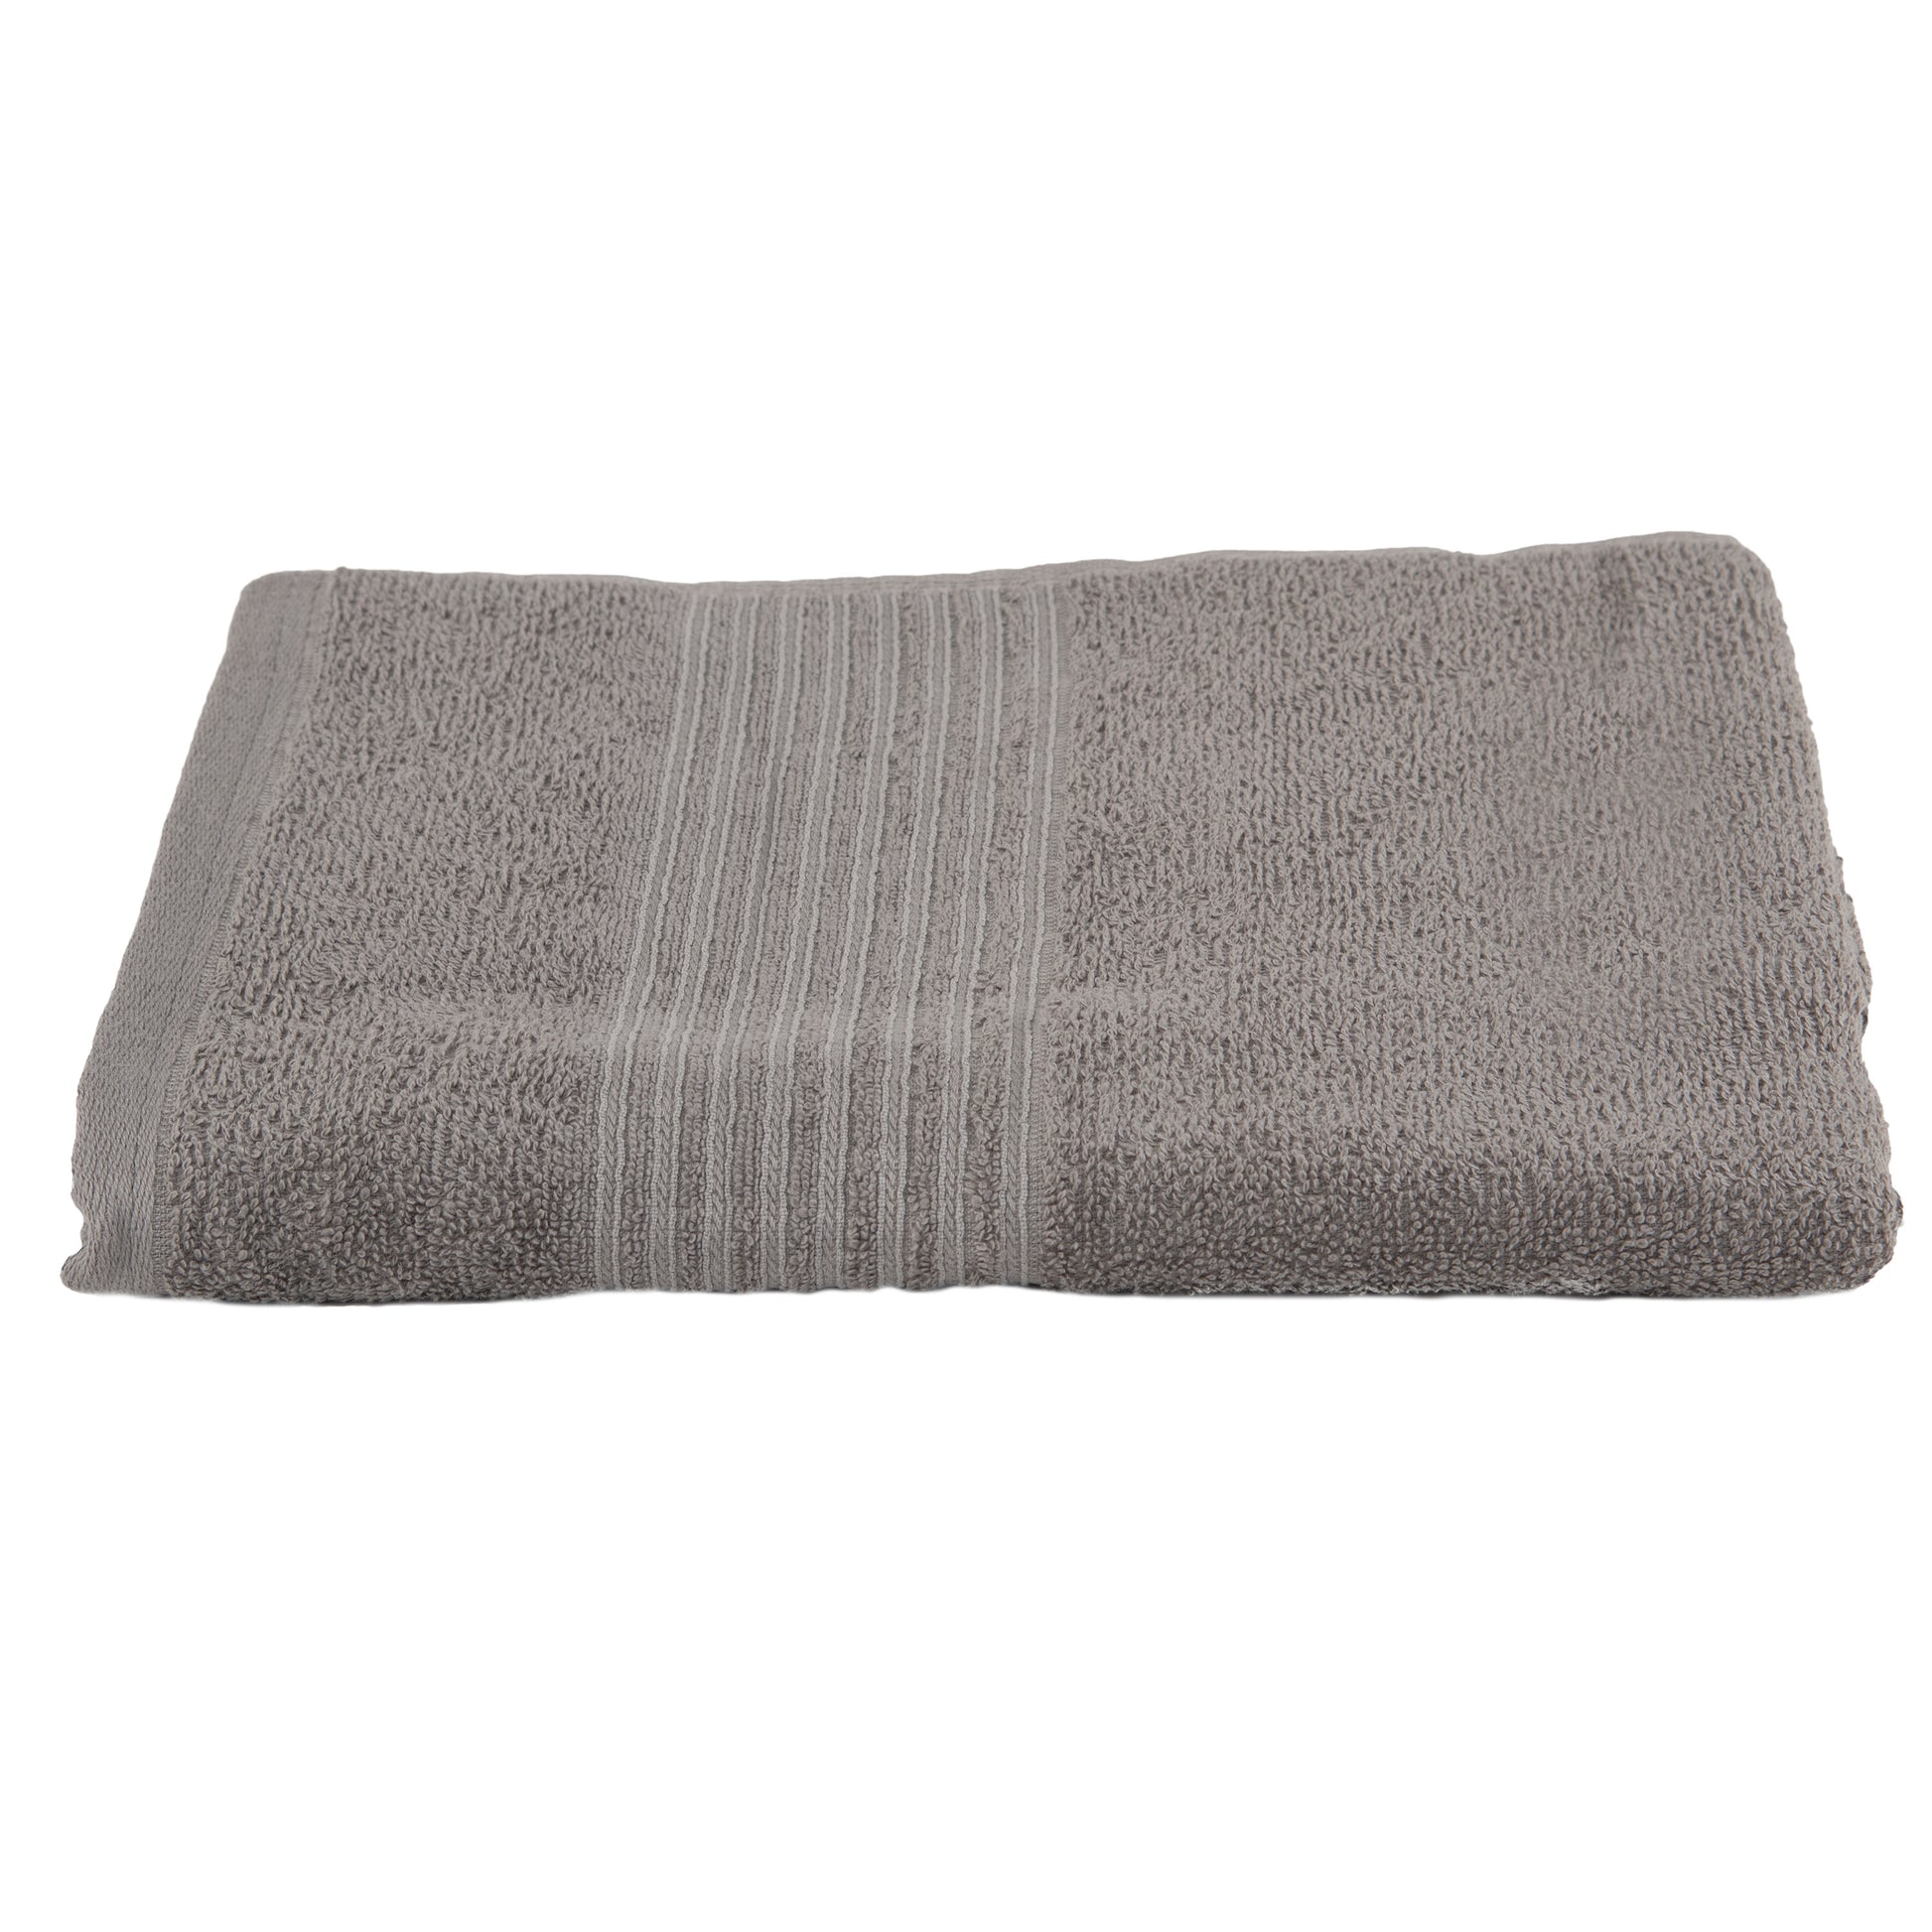 Turkish Bath Premium Cotton Belk Solid Bath Towel : Grey - SWHF